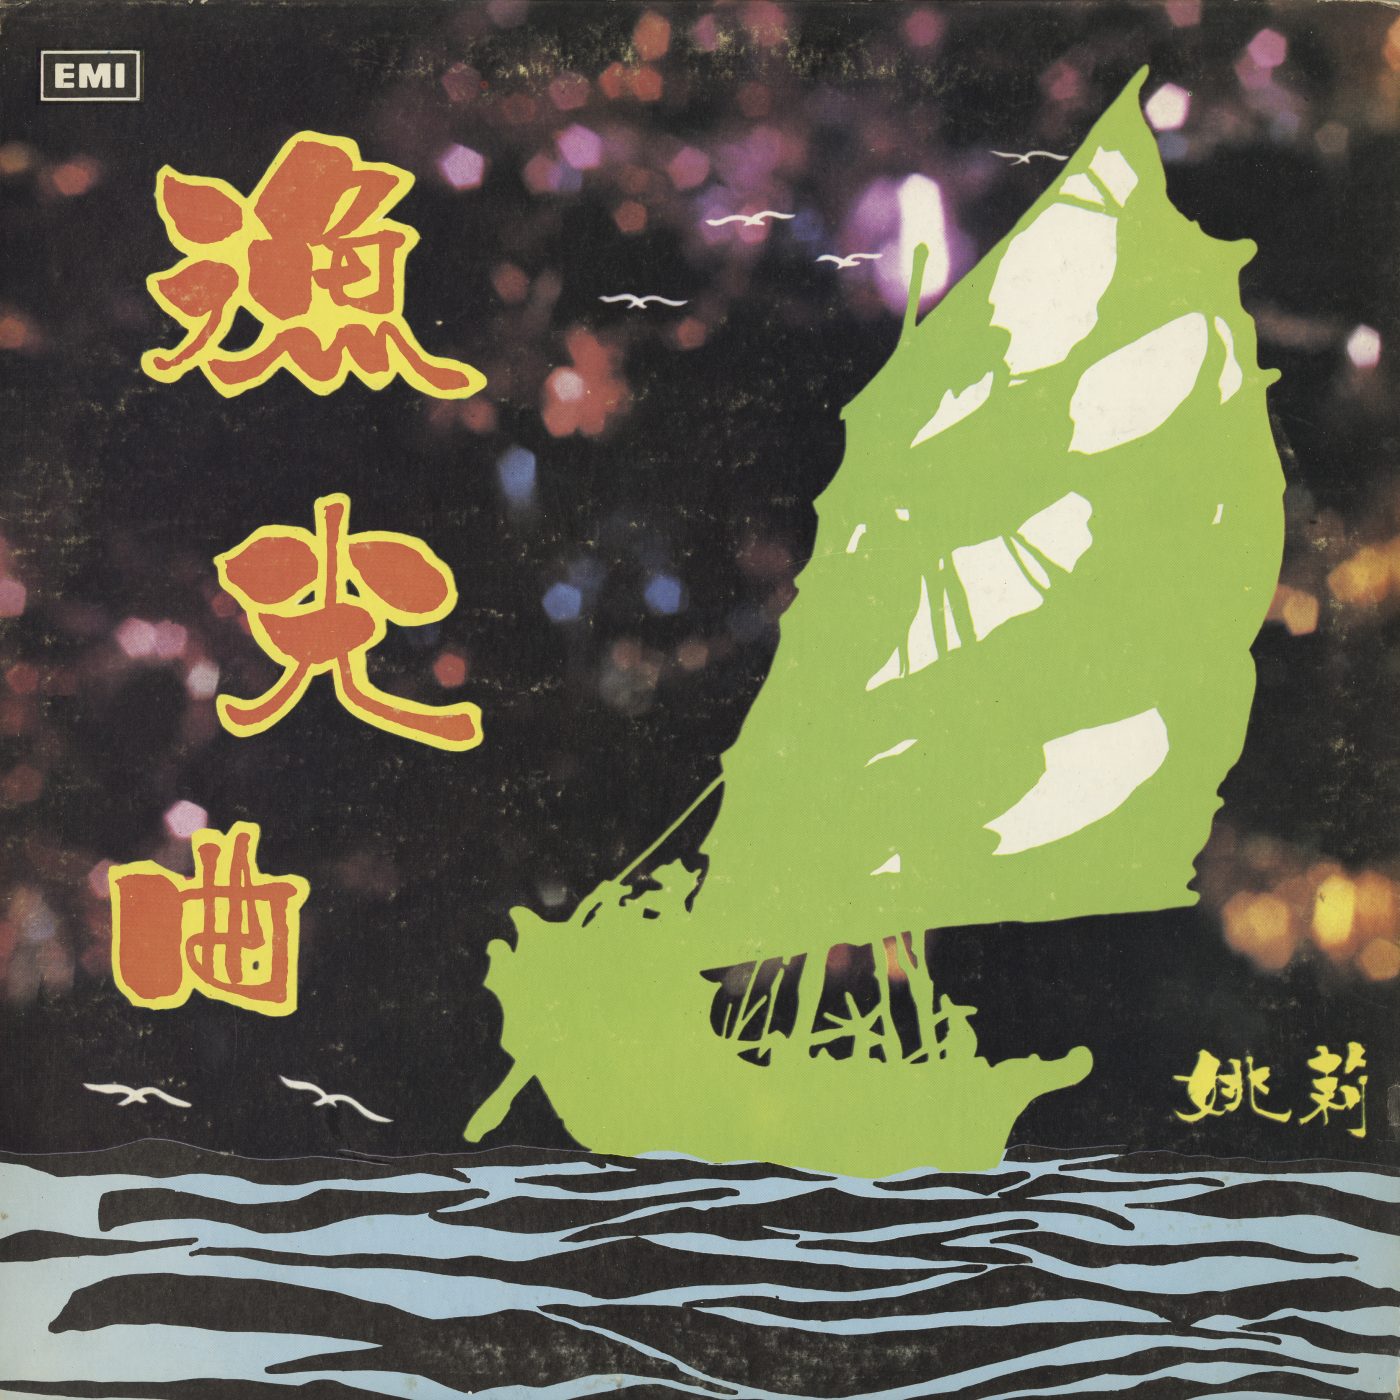 2022.038.020 – Yao Lee的渔光曲 (The Fisherman's Song)。 EMI/REGAL 1971年 香港。由Choi “Nancy” Chan捐赠，美国华人博物馆 (MOCA) 馆藏。